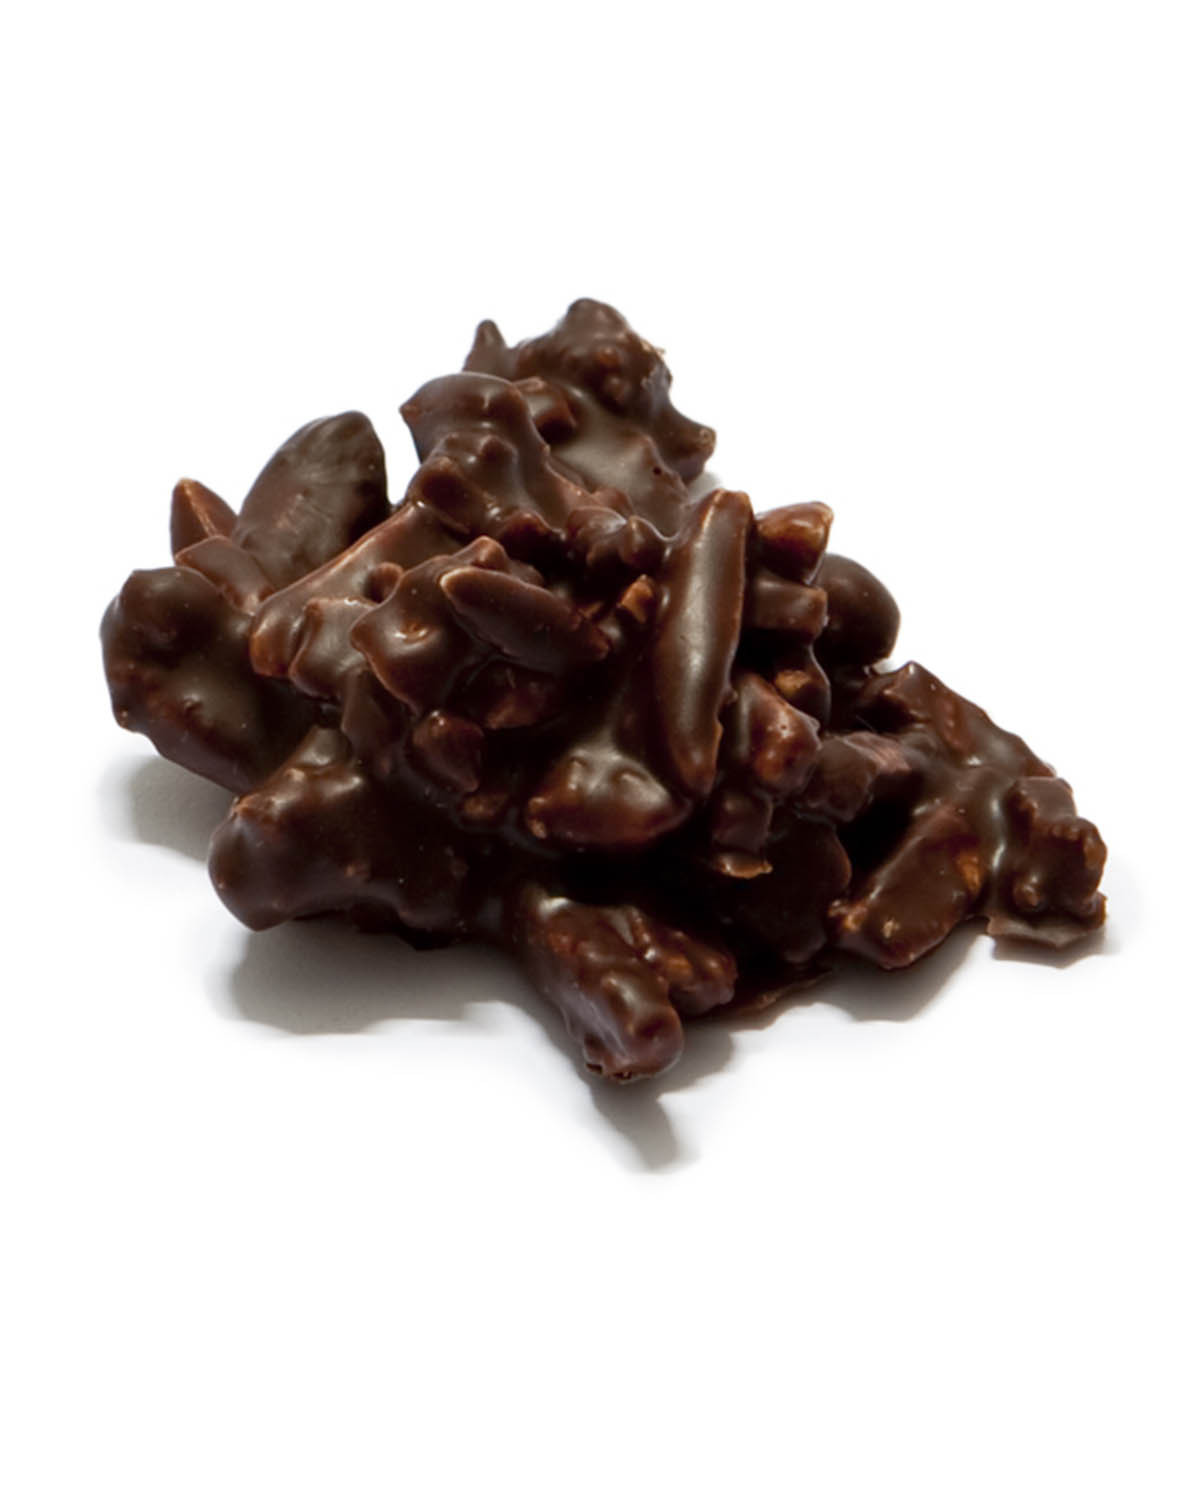 Roca de almendra caramelizada con chocolate